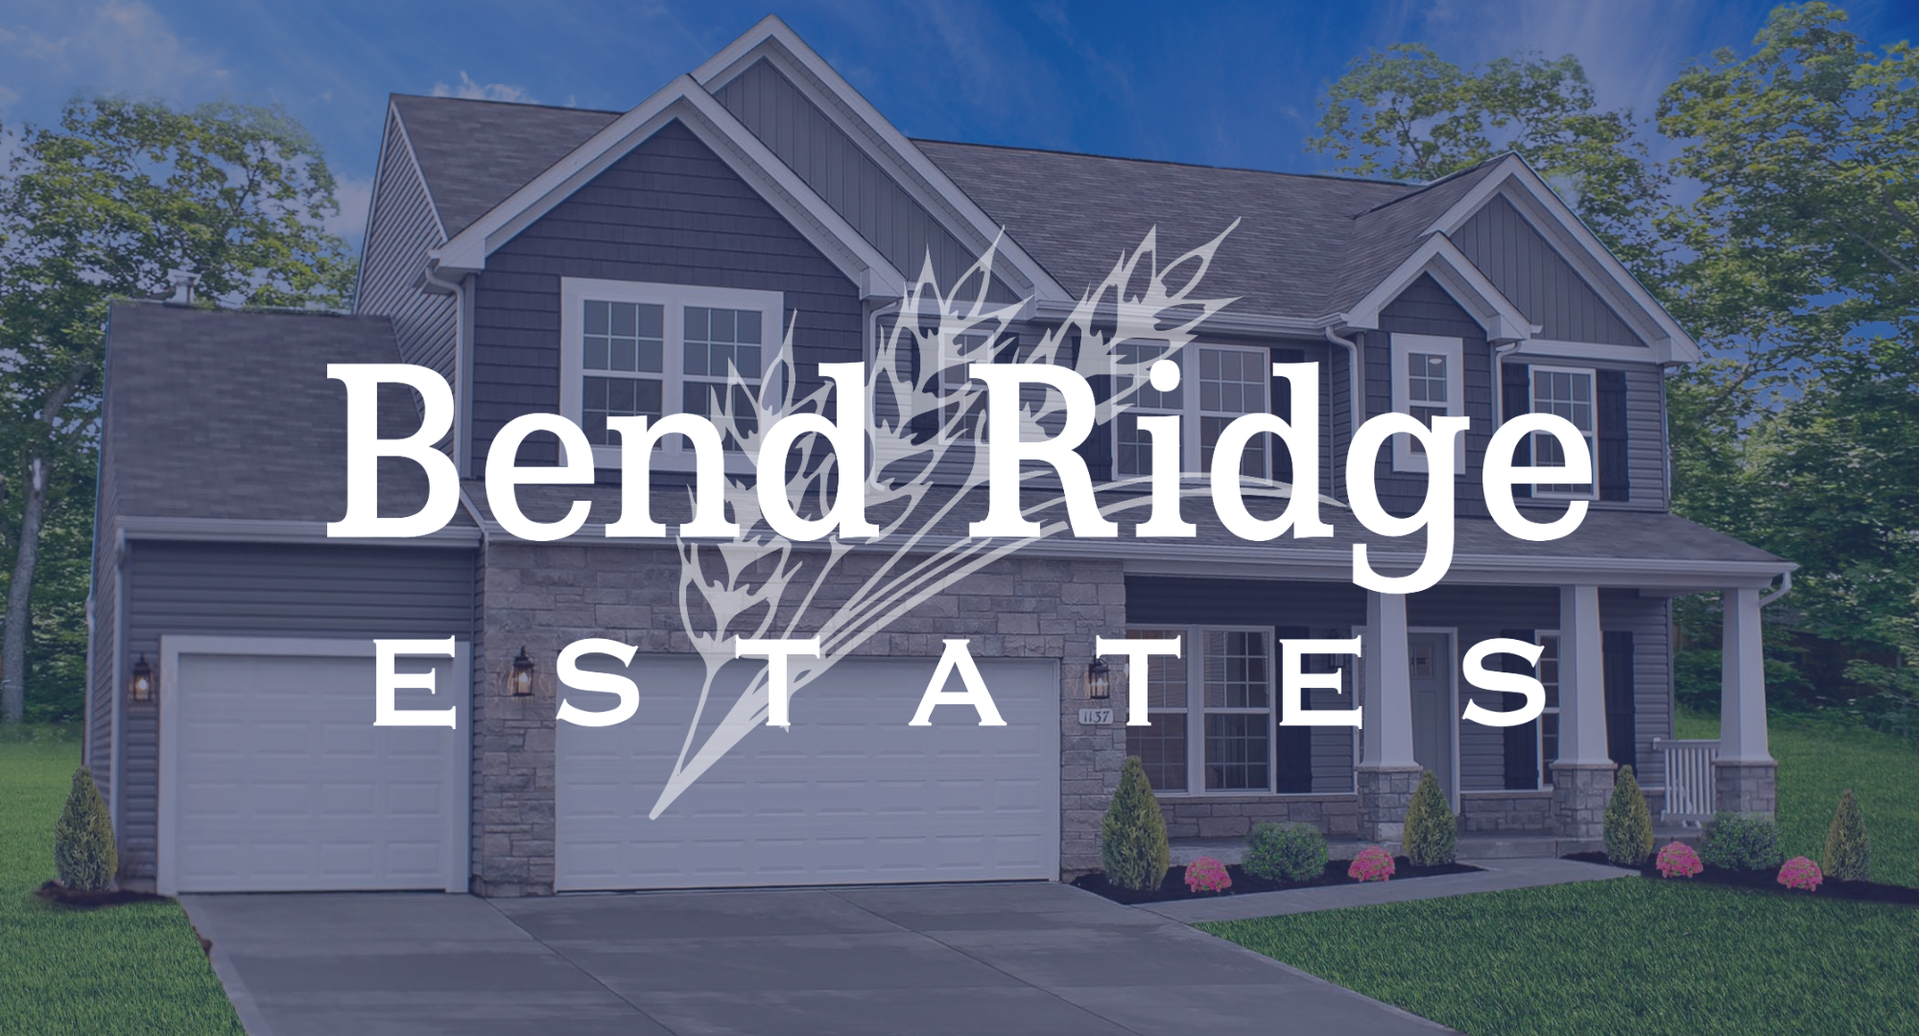 Bend Ridge Estates - New Homes Pacific, MO. Pacific, MO New Homes